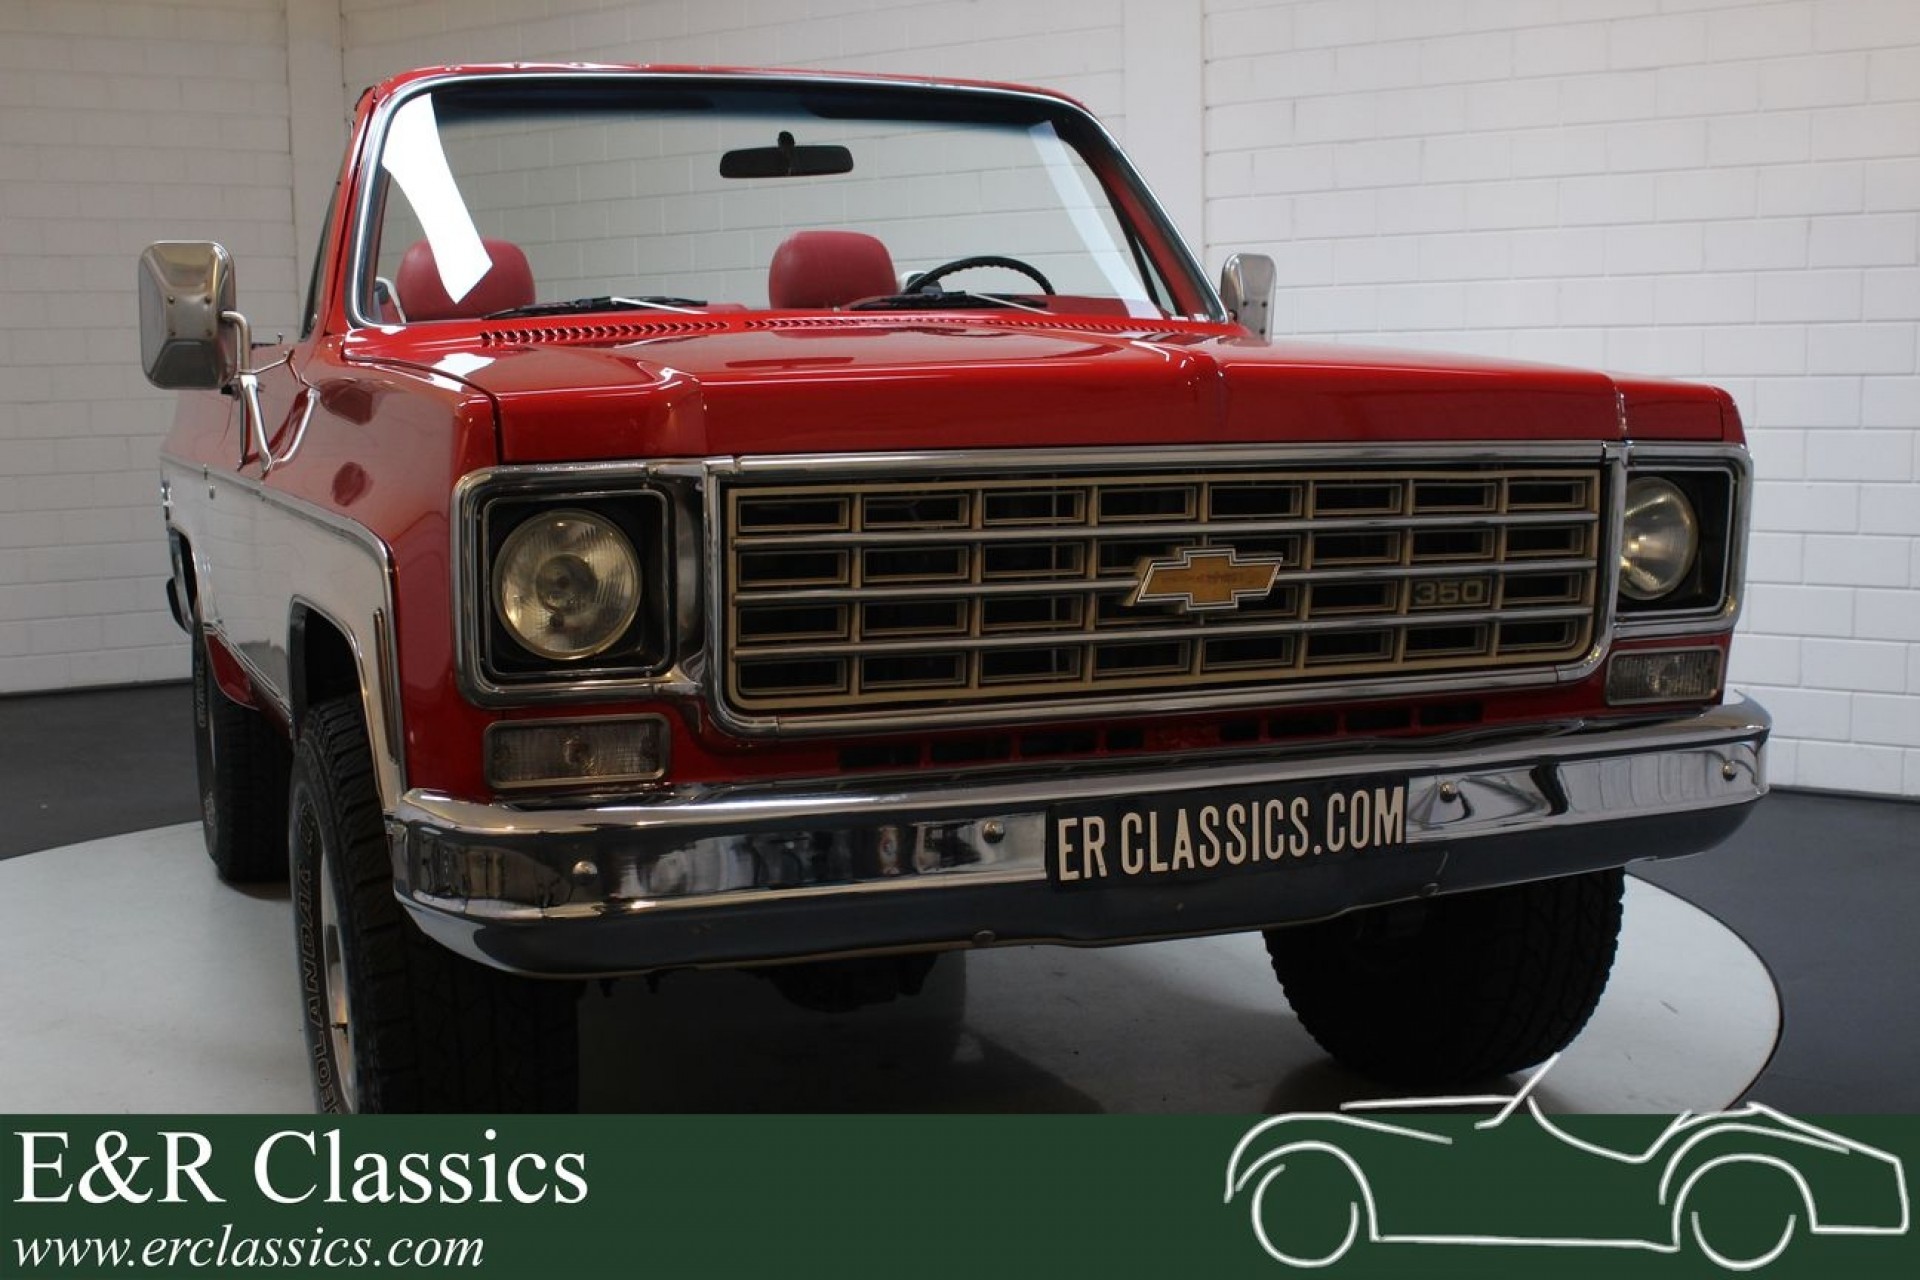 Chevrolet Blazer K5 Convertible 1975 5 7l V8 4x4 For Sale At Erclassics